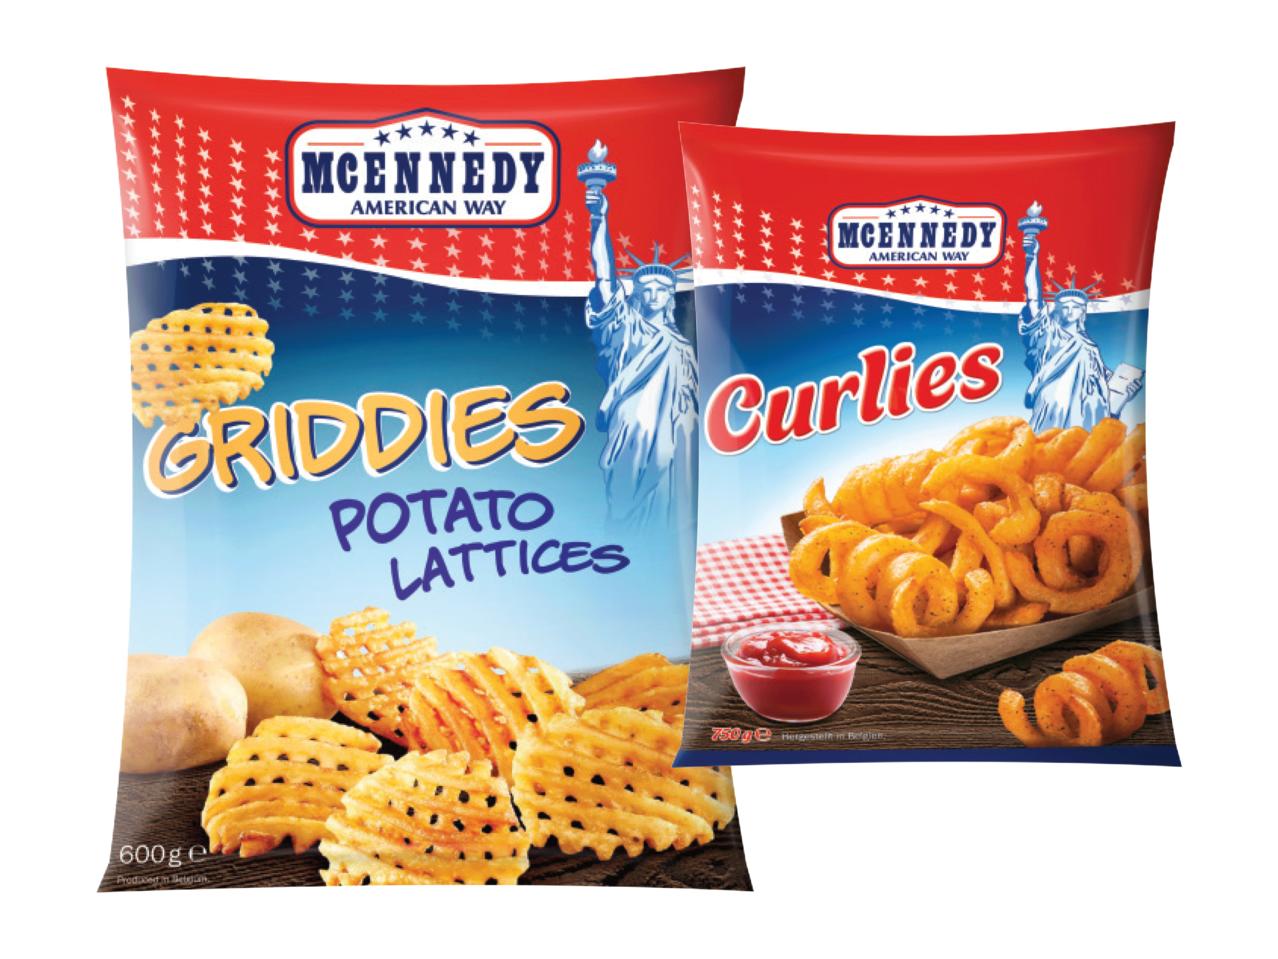 MCENNEDY Potato Lattices/ Curlies